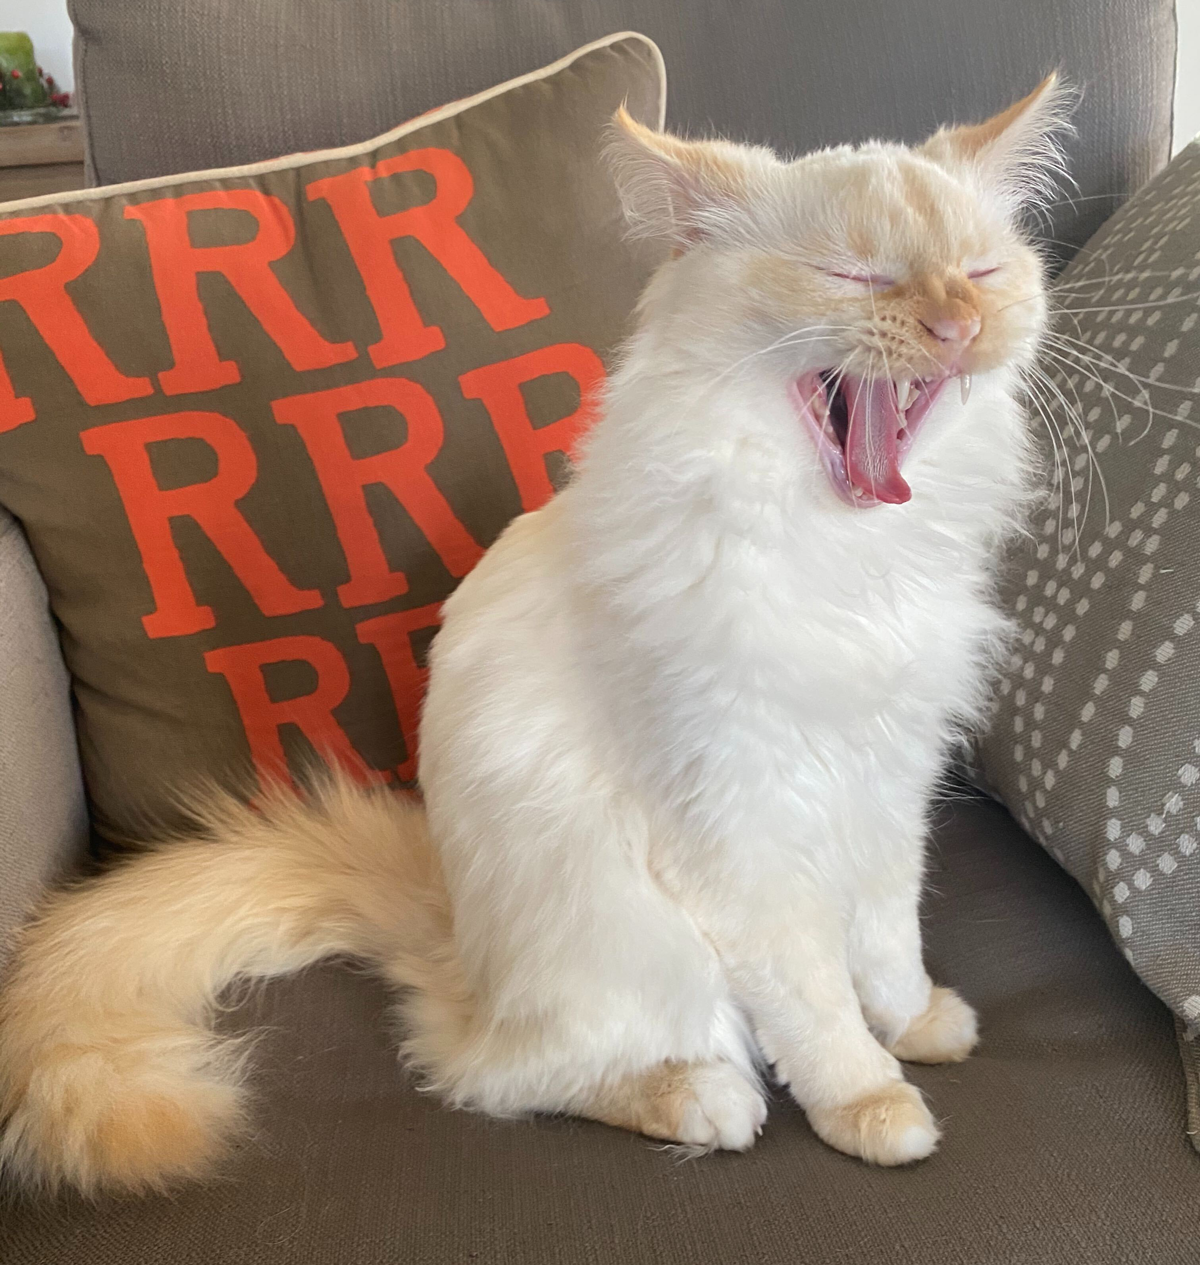 Woodrow, a cream-colored cat, making a "rawr" face